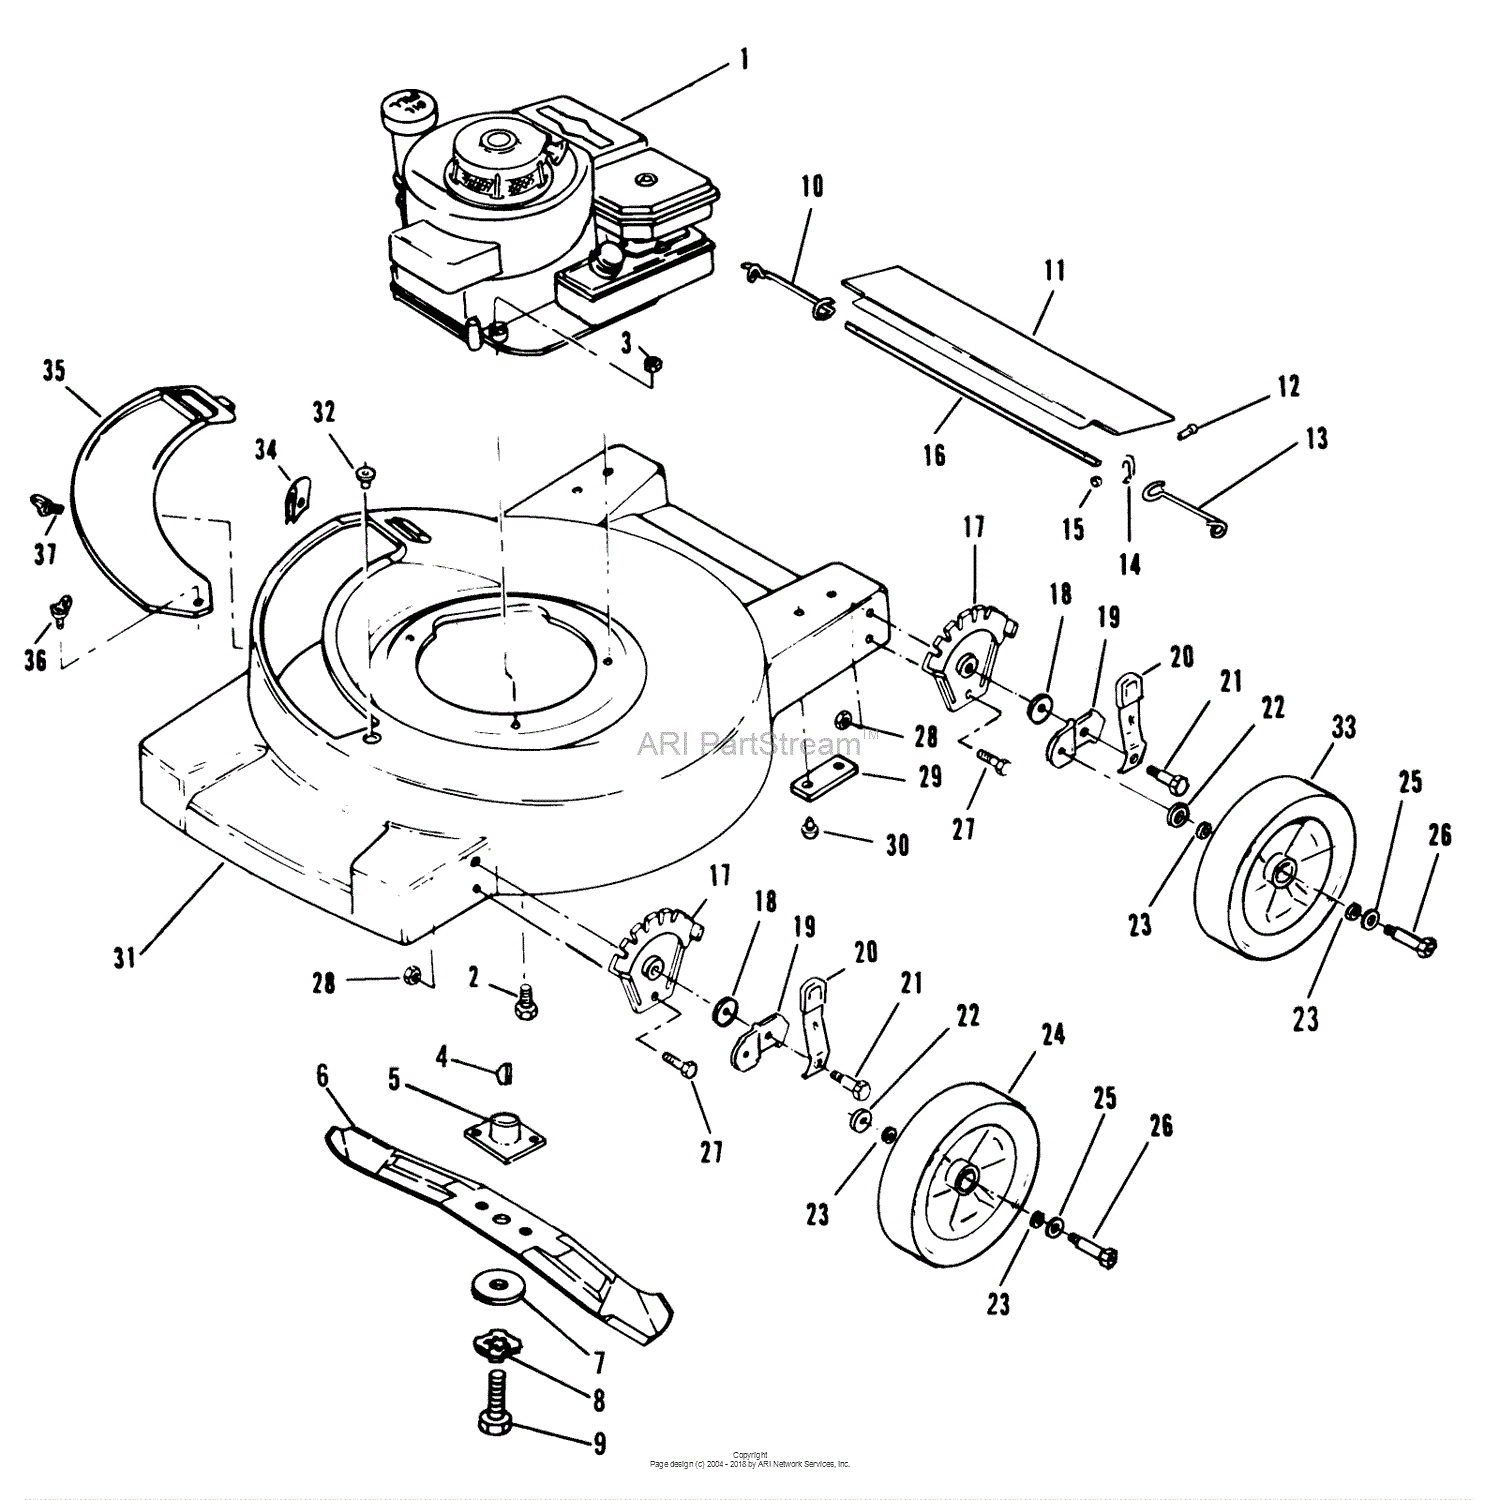 Parts Of A Lawn Mower Diagram